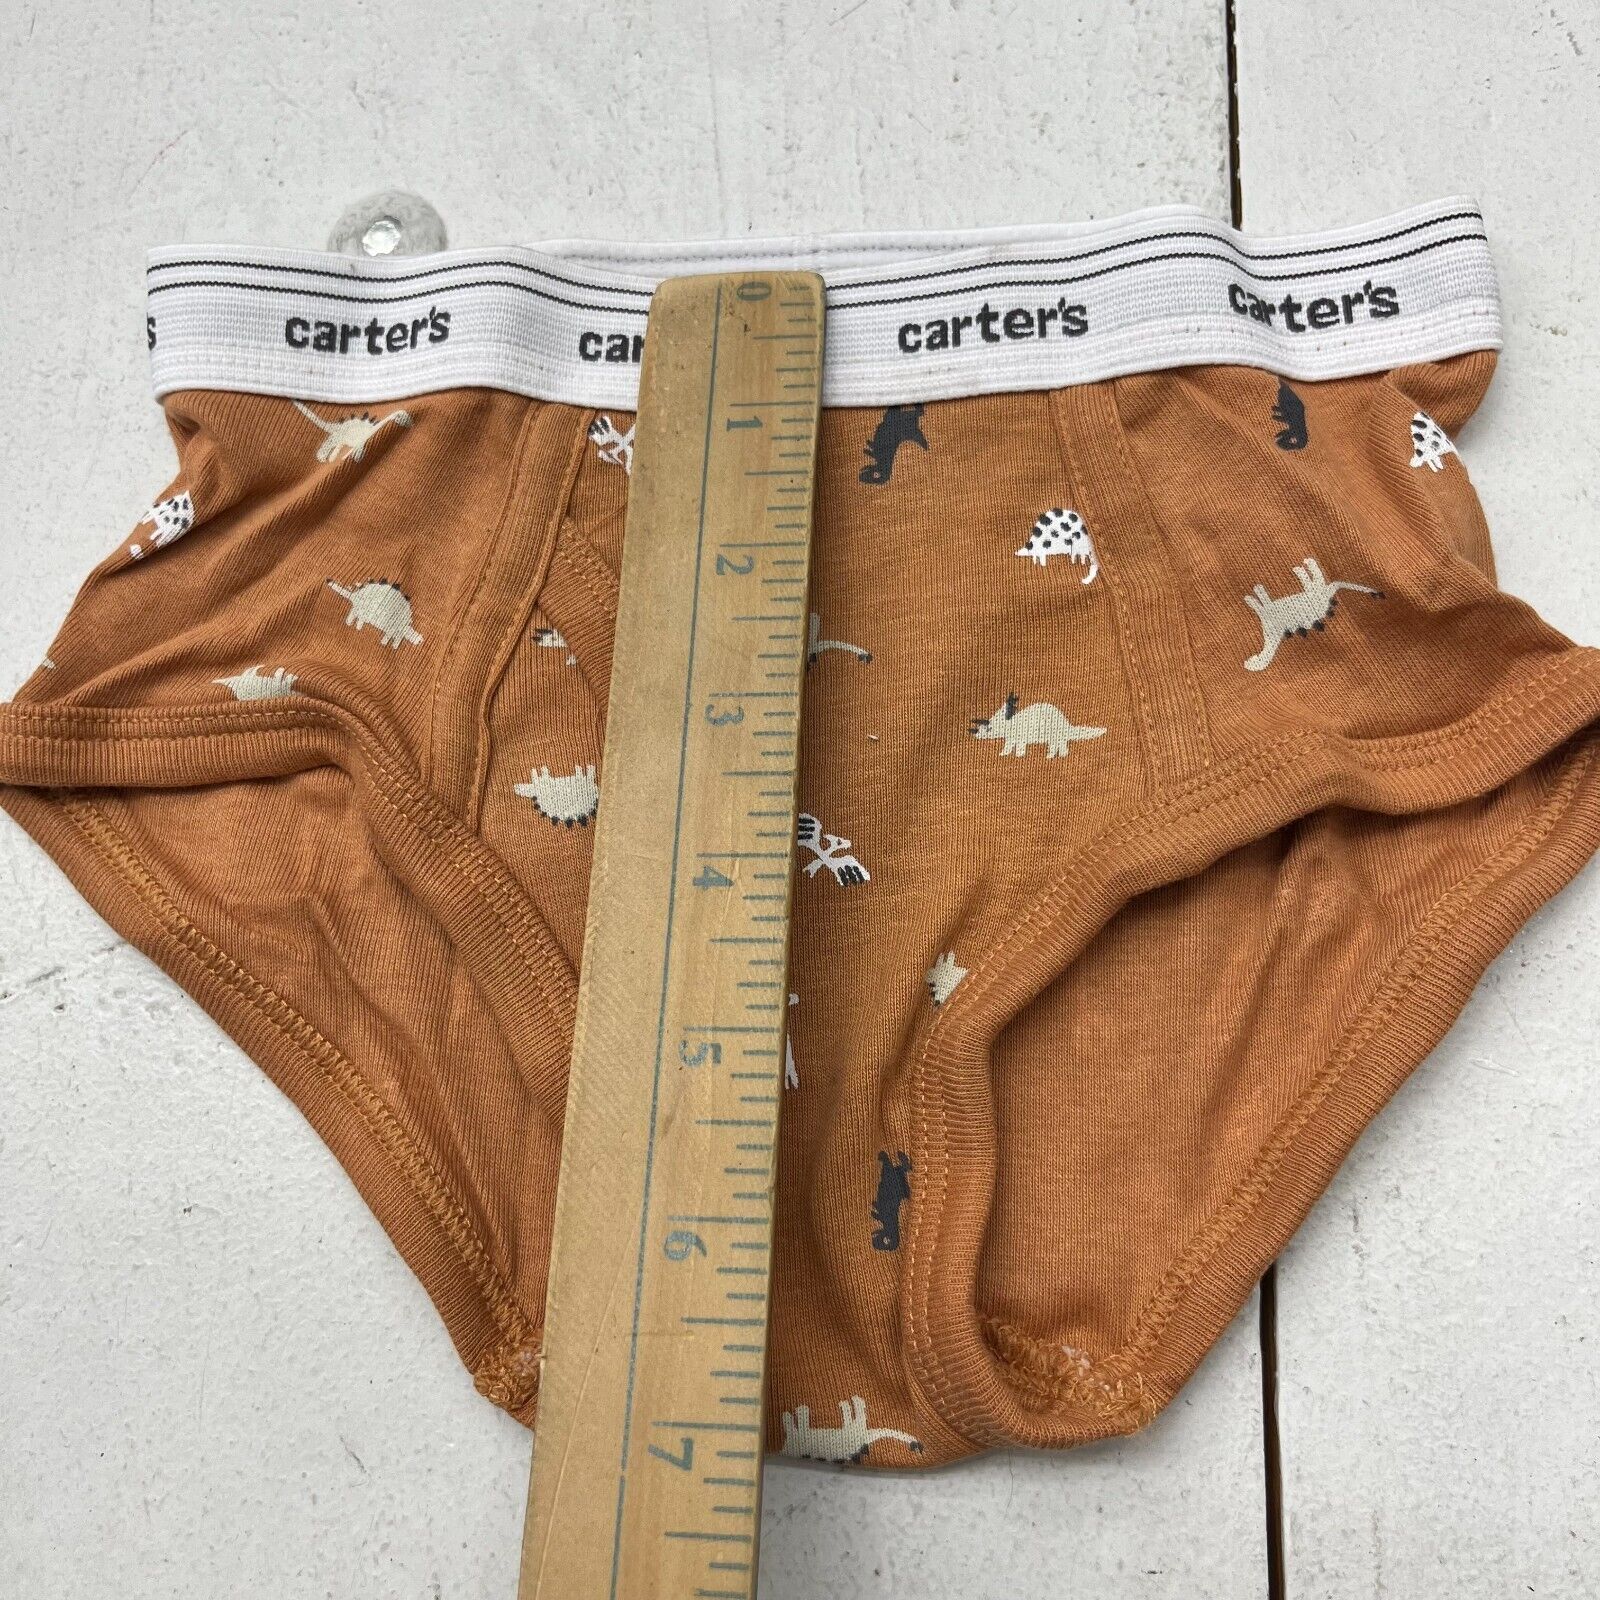  Carters Underwear